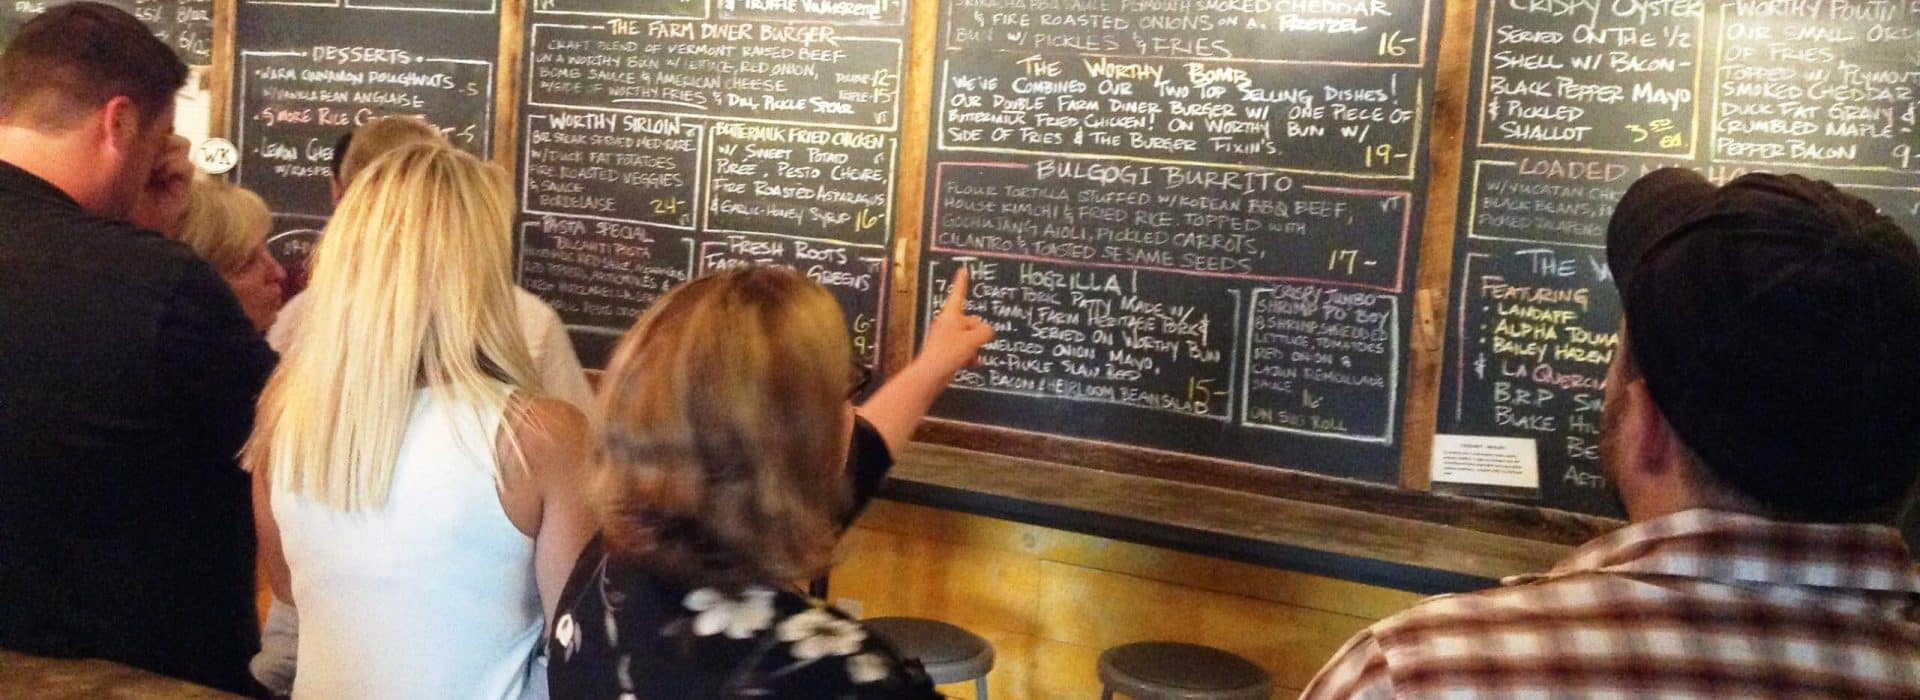 Worthy Kitchen chalkboard menu